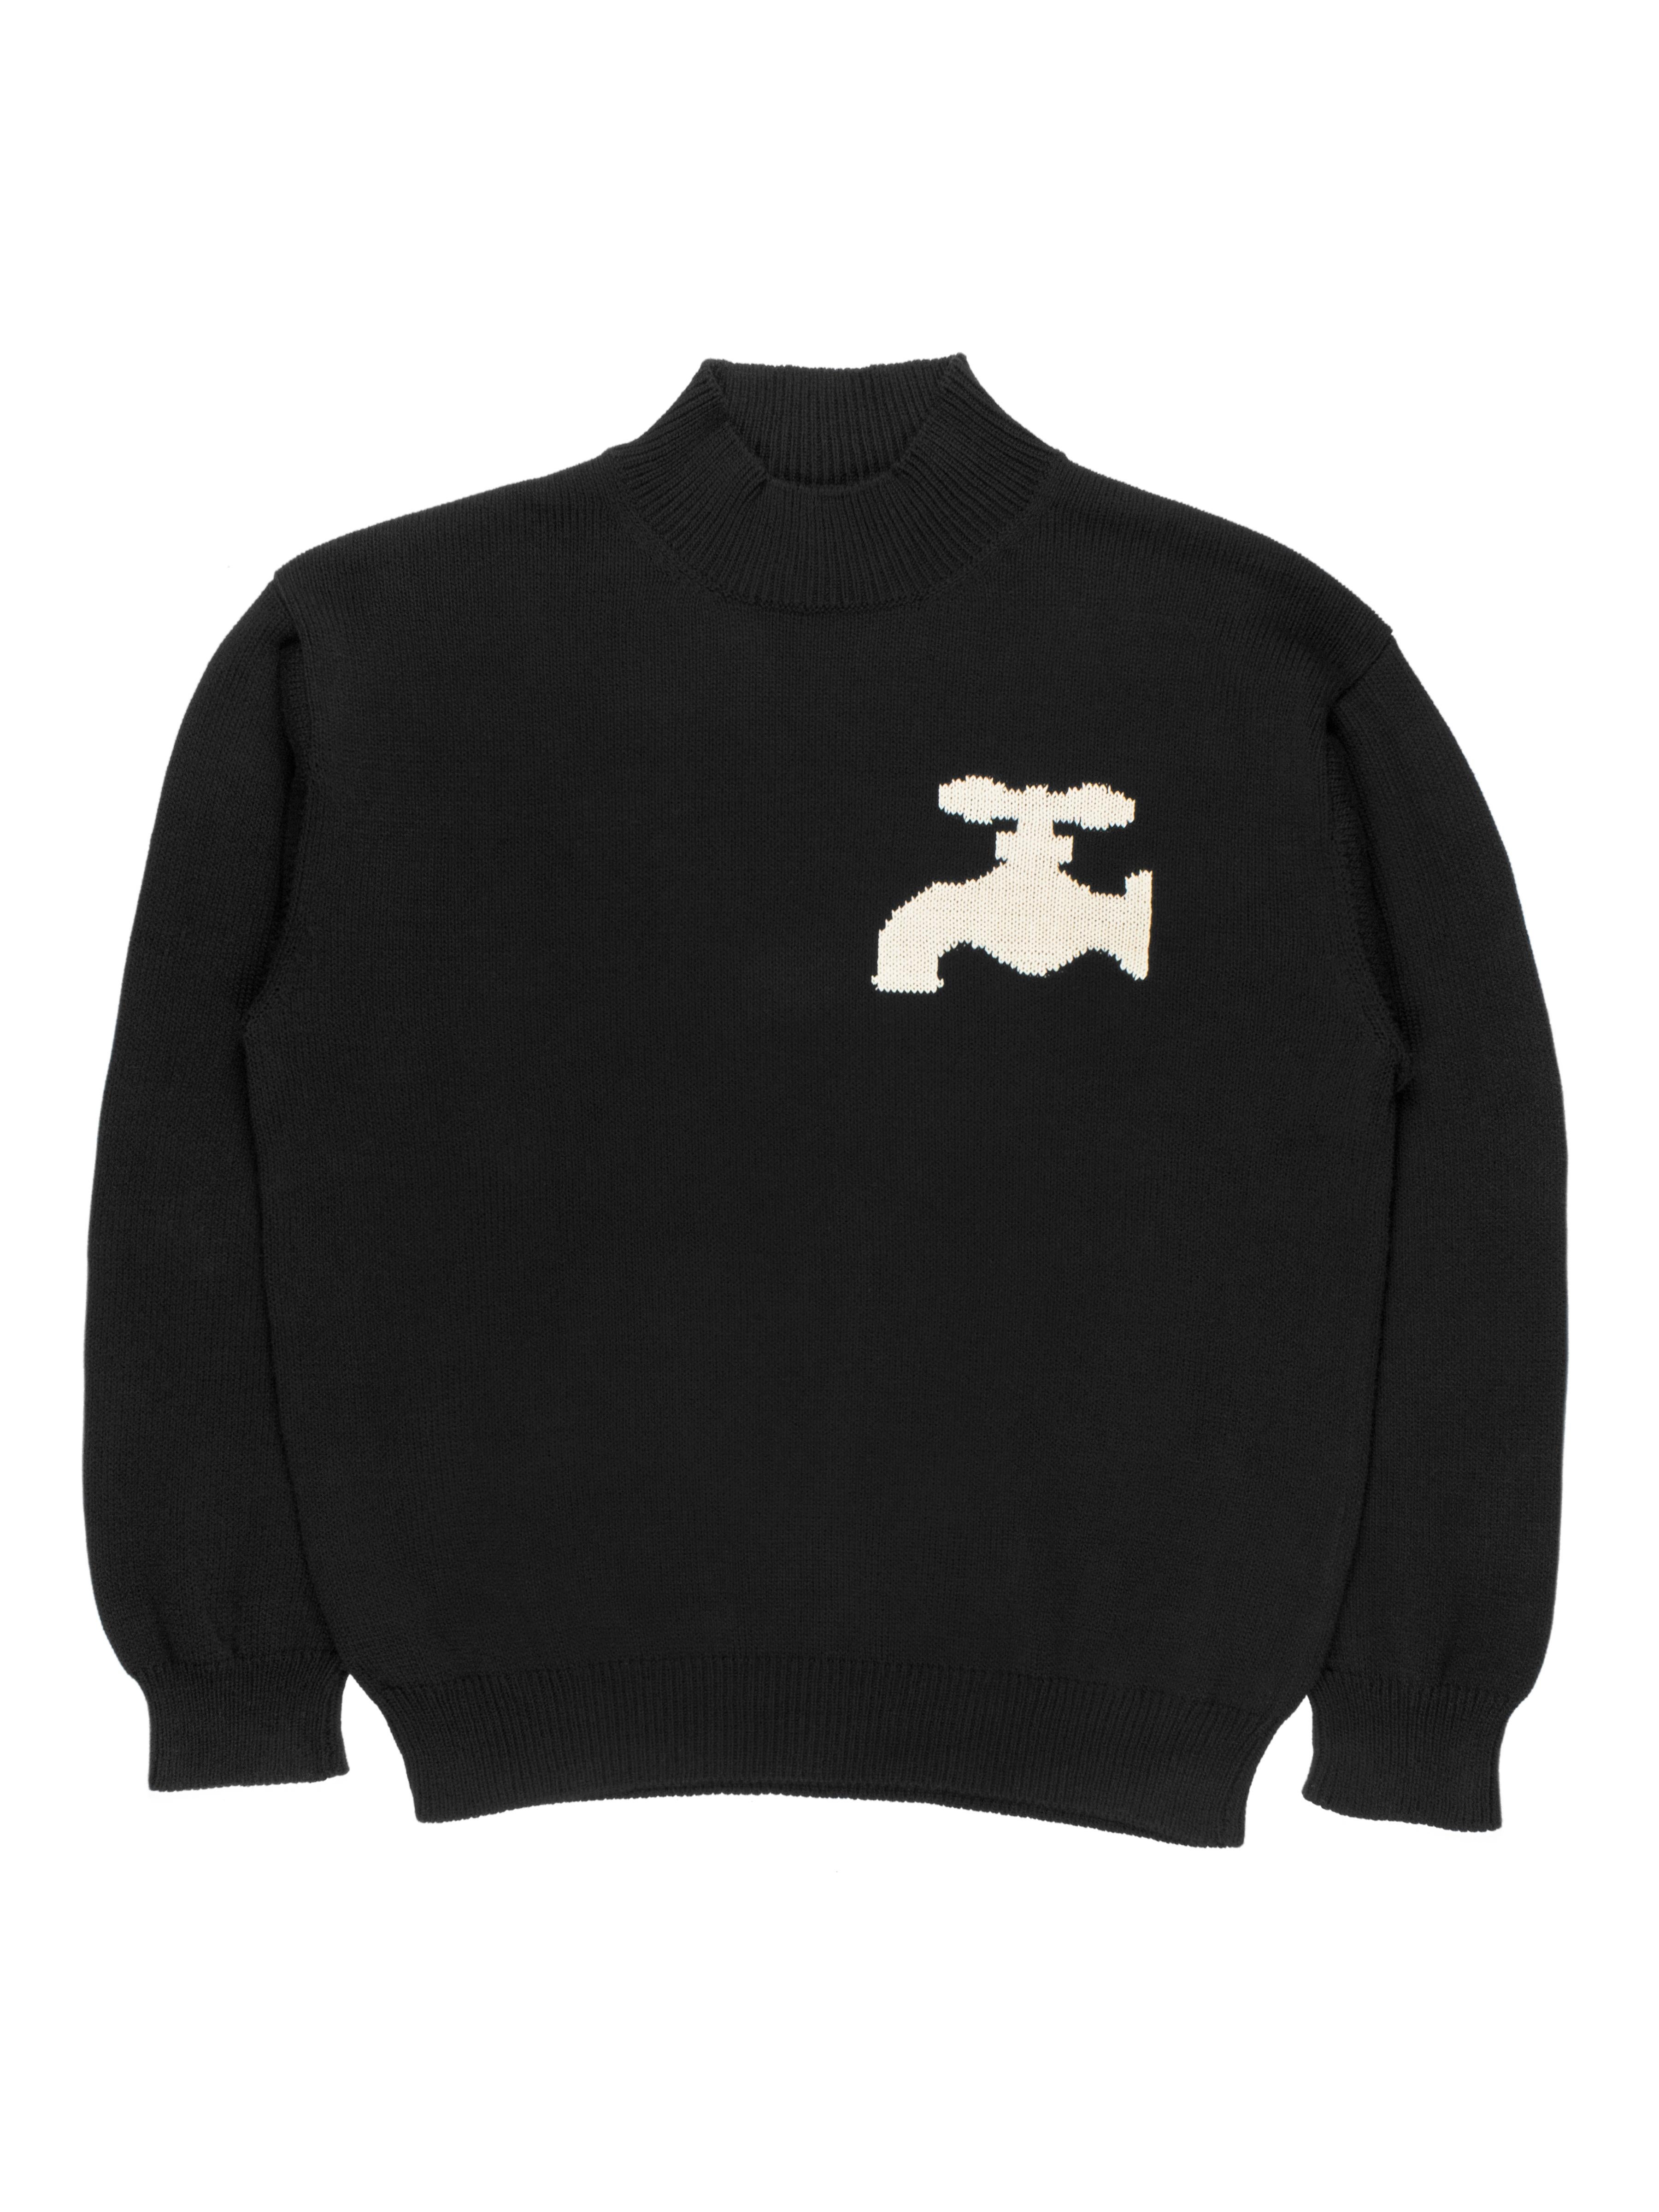 Black Yohji Yamamoto Y's for Men Faucet Sweater